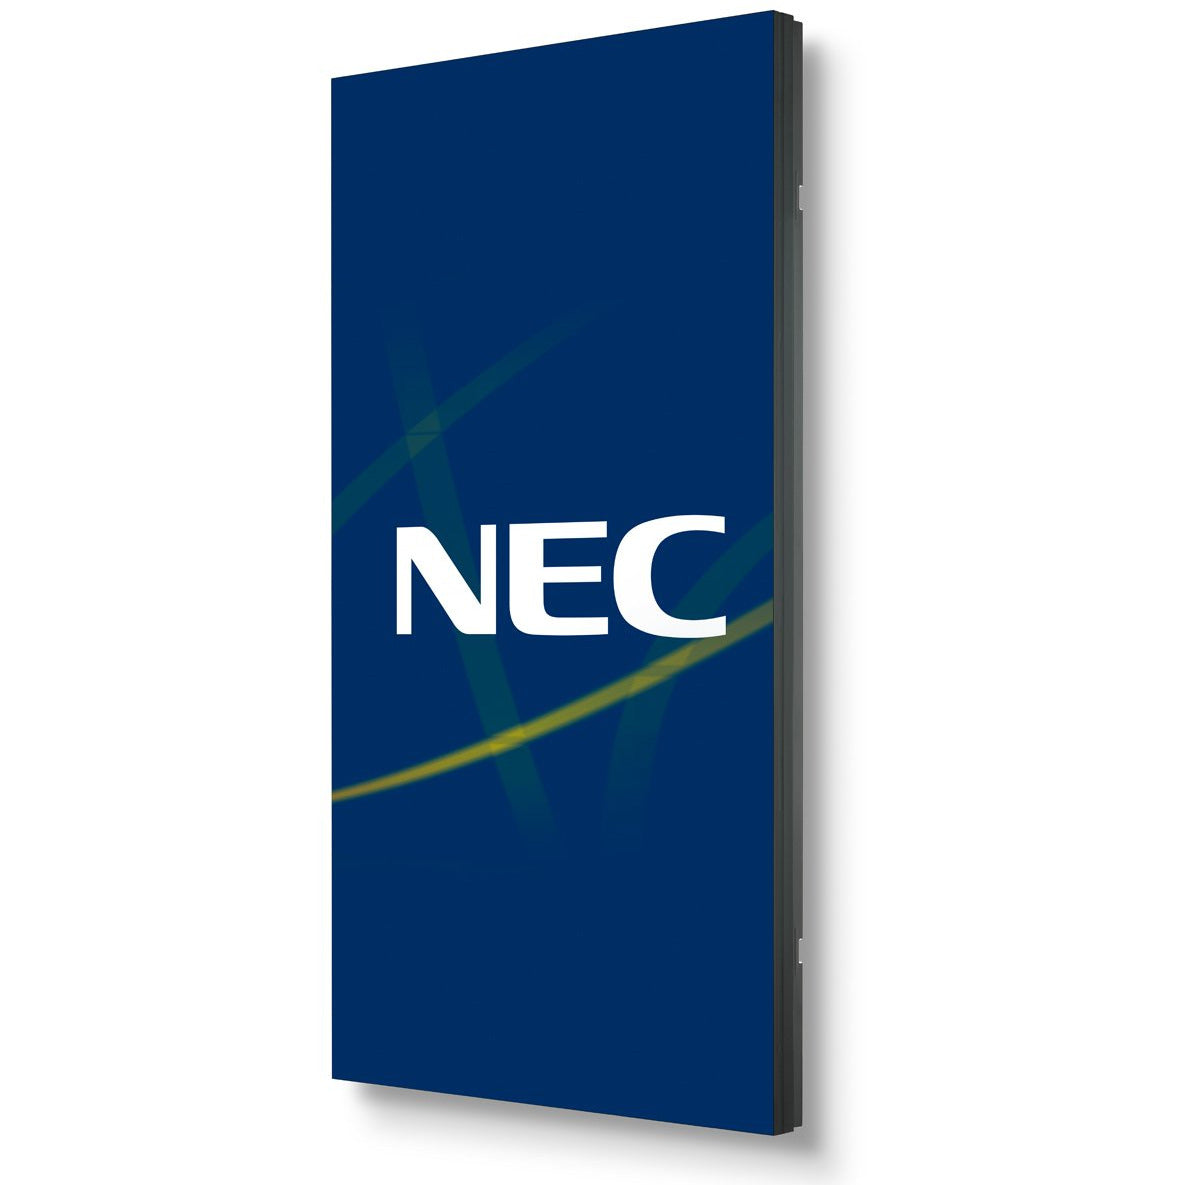 NEC MultiSync® UN552 LCD 55" Video Wall Display